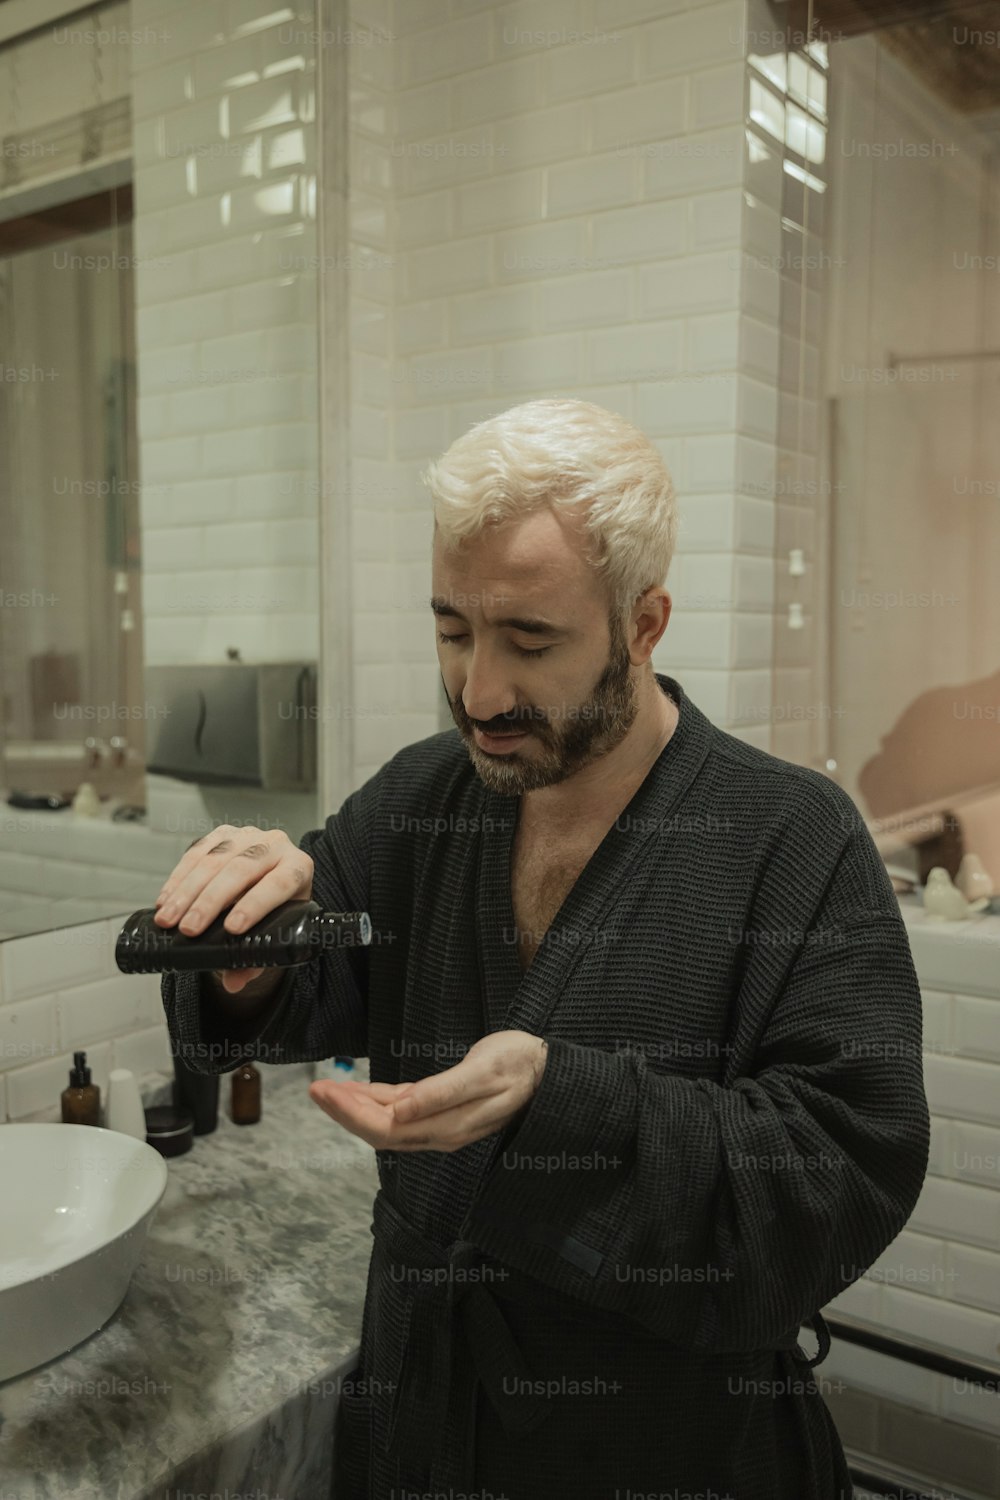 a man in a bathrobe is holding a bottle